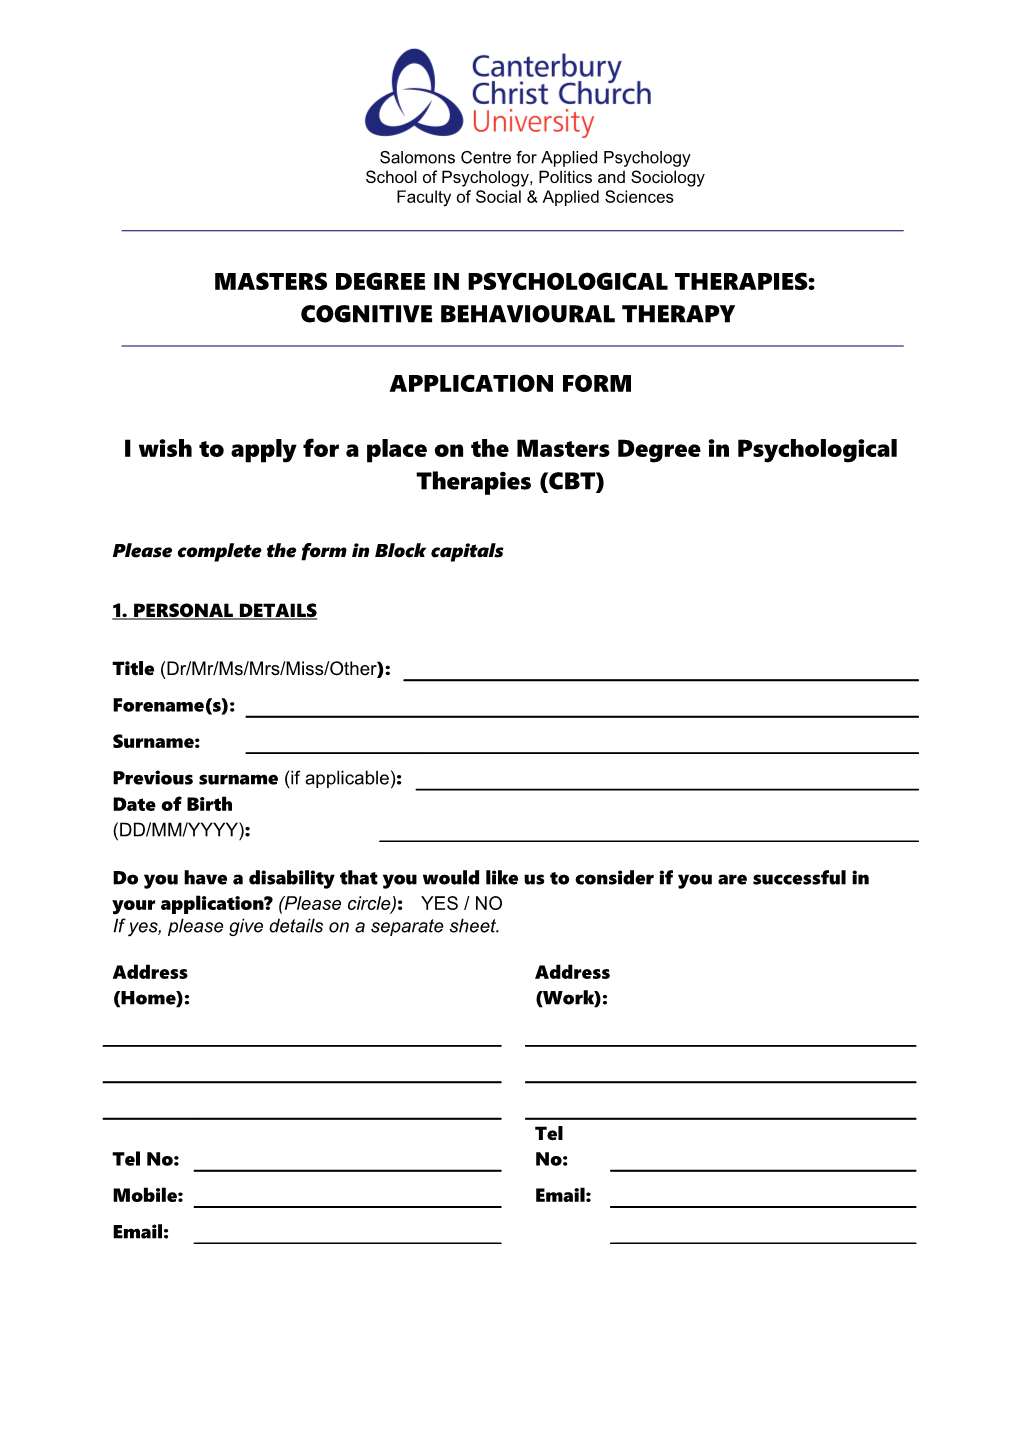 Application Form for Msc in CBT